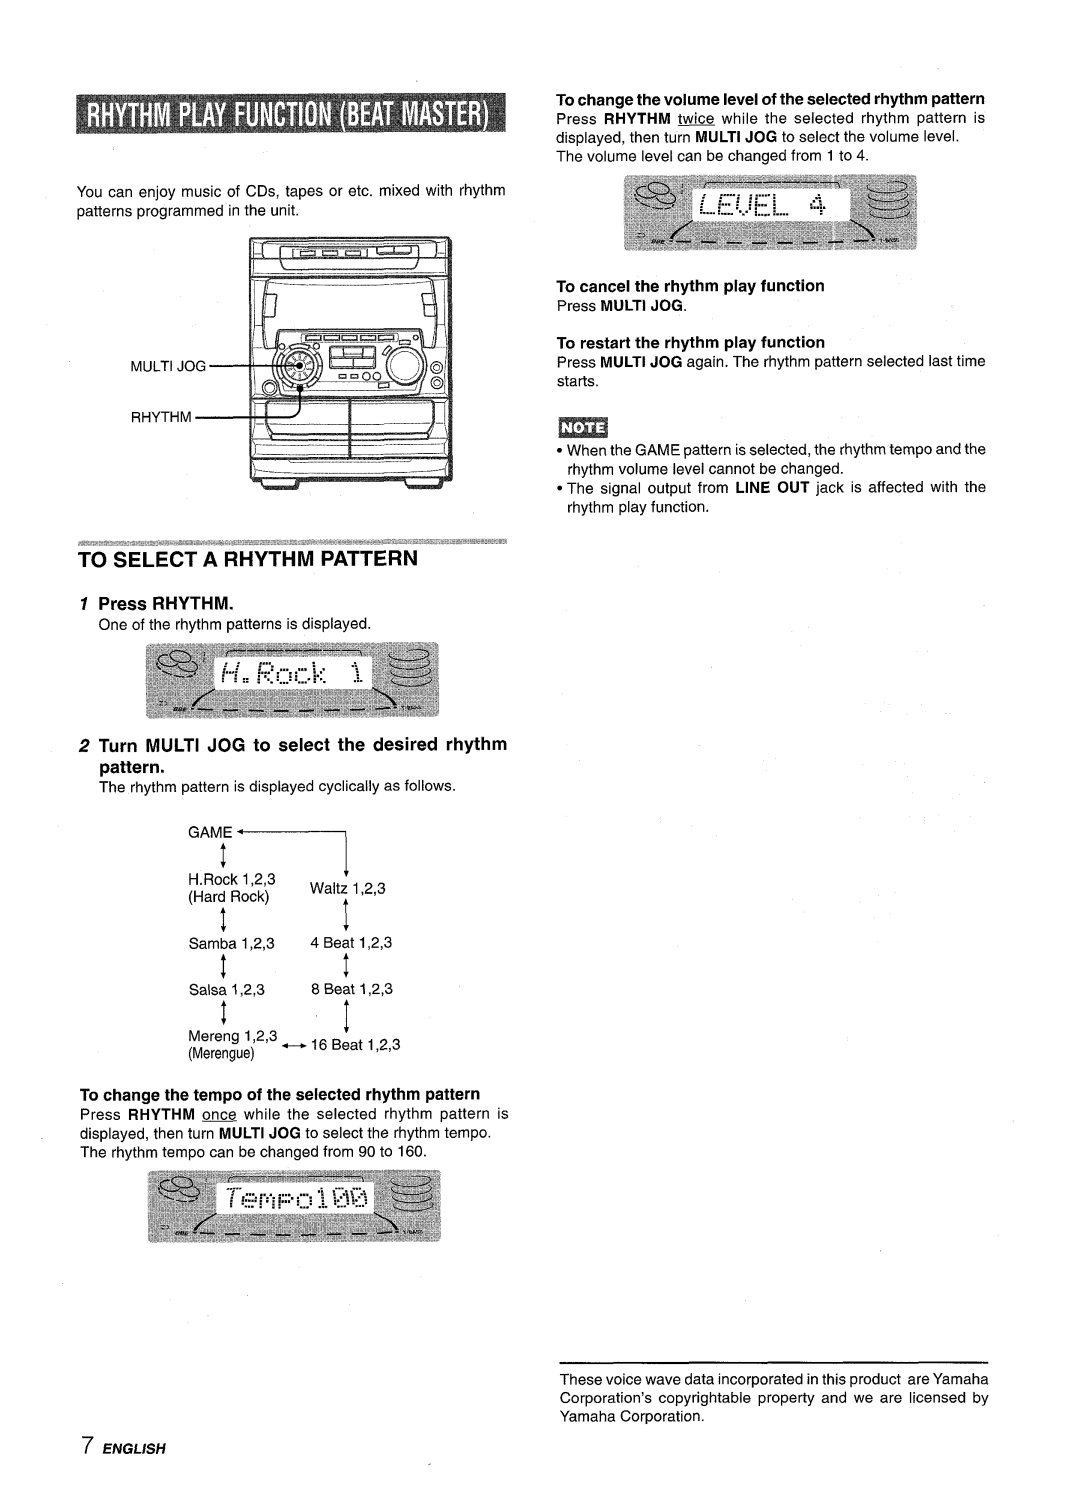 Sony NSX-A707 manual Turn MULTI JOG to select the desired rhythm pattern, English, ‘A”il + 